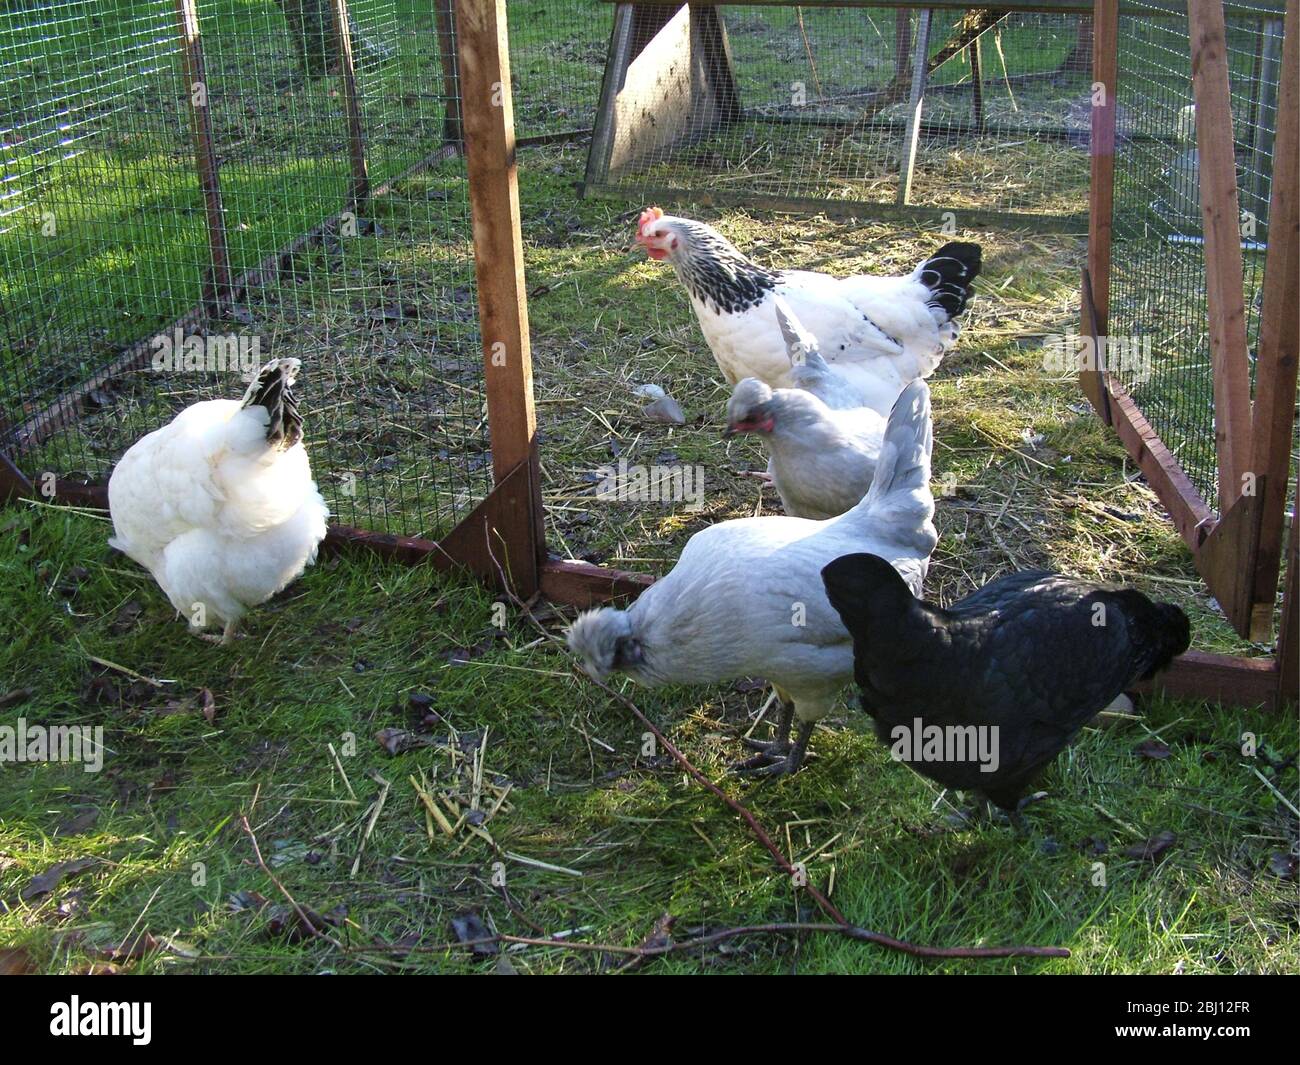 Chickens running free in garden - Stock Photo